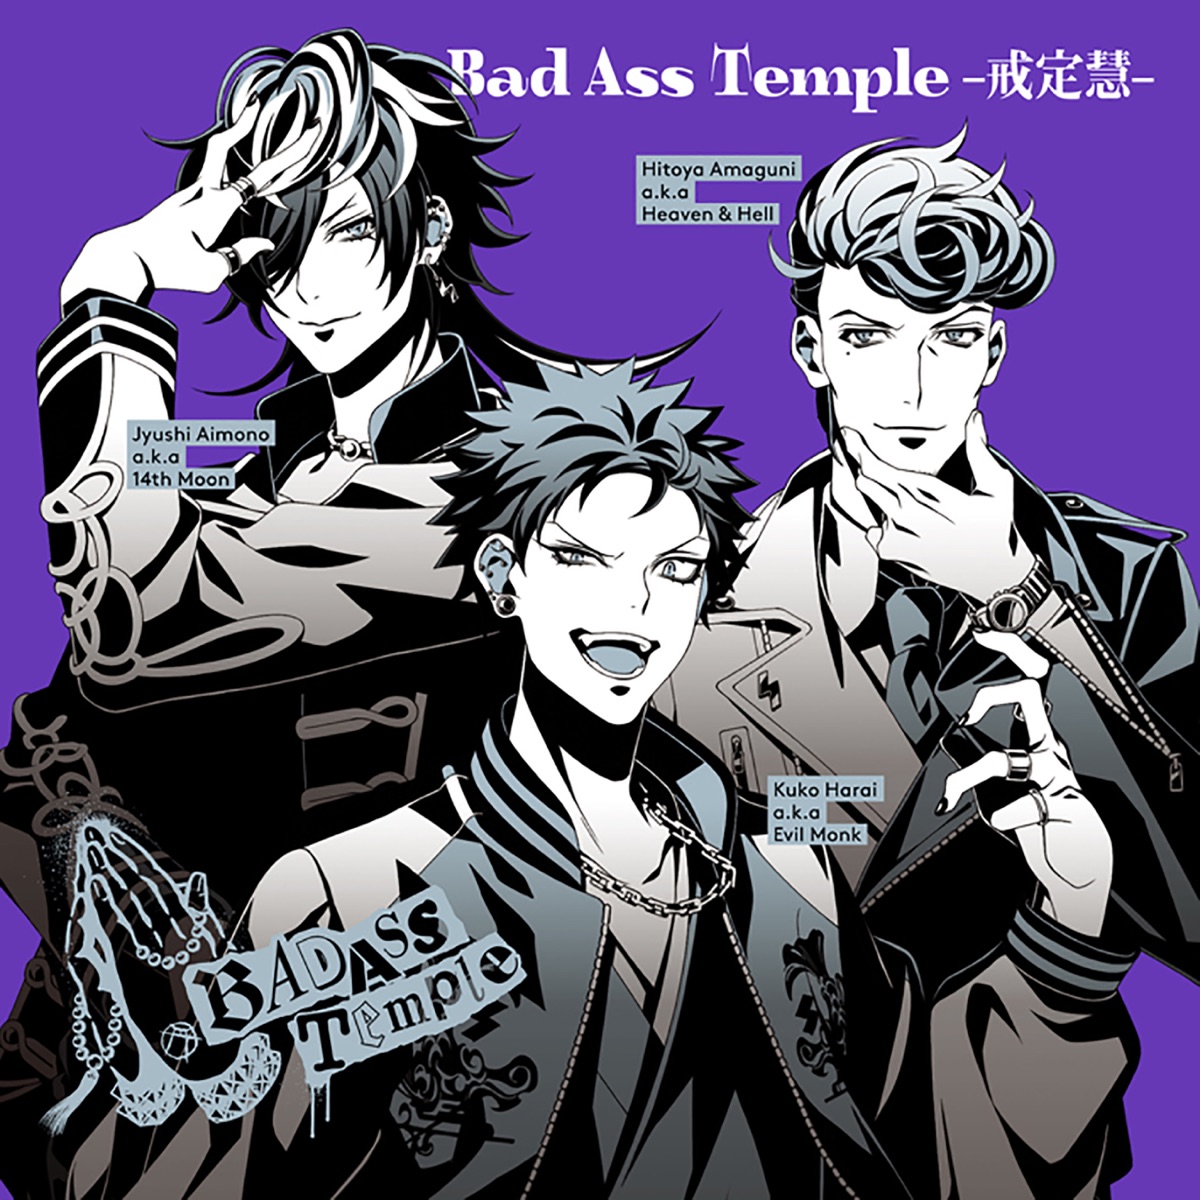 Cover art for『Jyushi Aimono (Yuki Sakakihara) - Violet Masquerade』from the release『Bad Ass Temple -Kaijoue-』